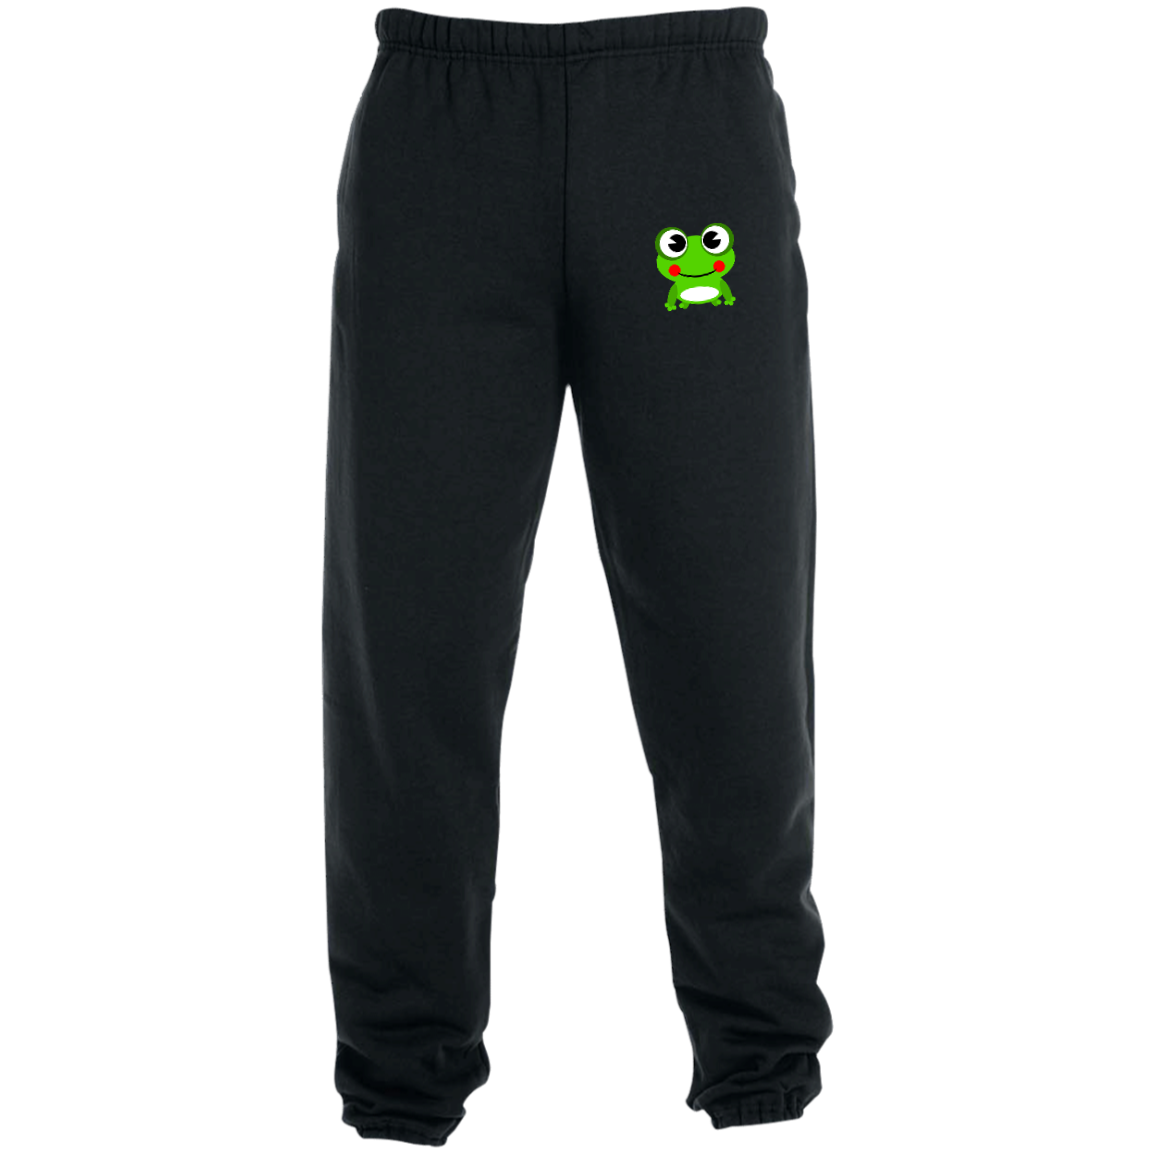 Funny Green Frog Cartoon Pockets